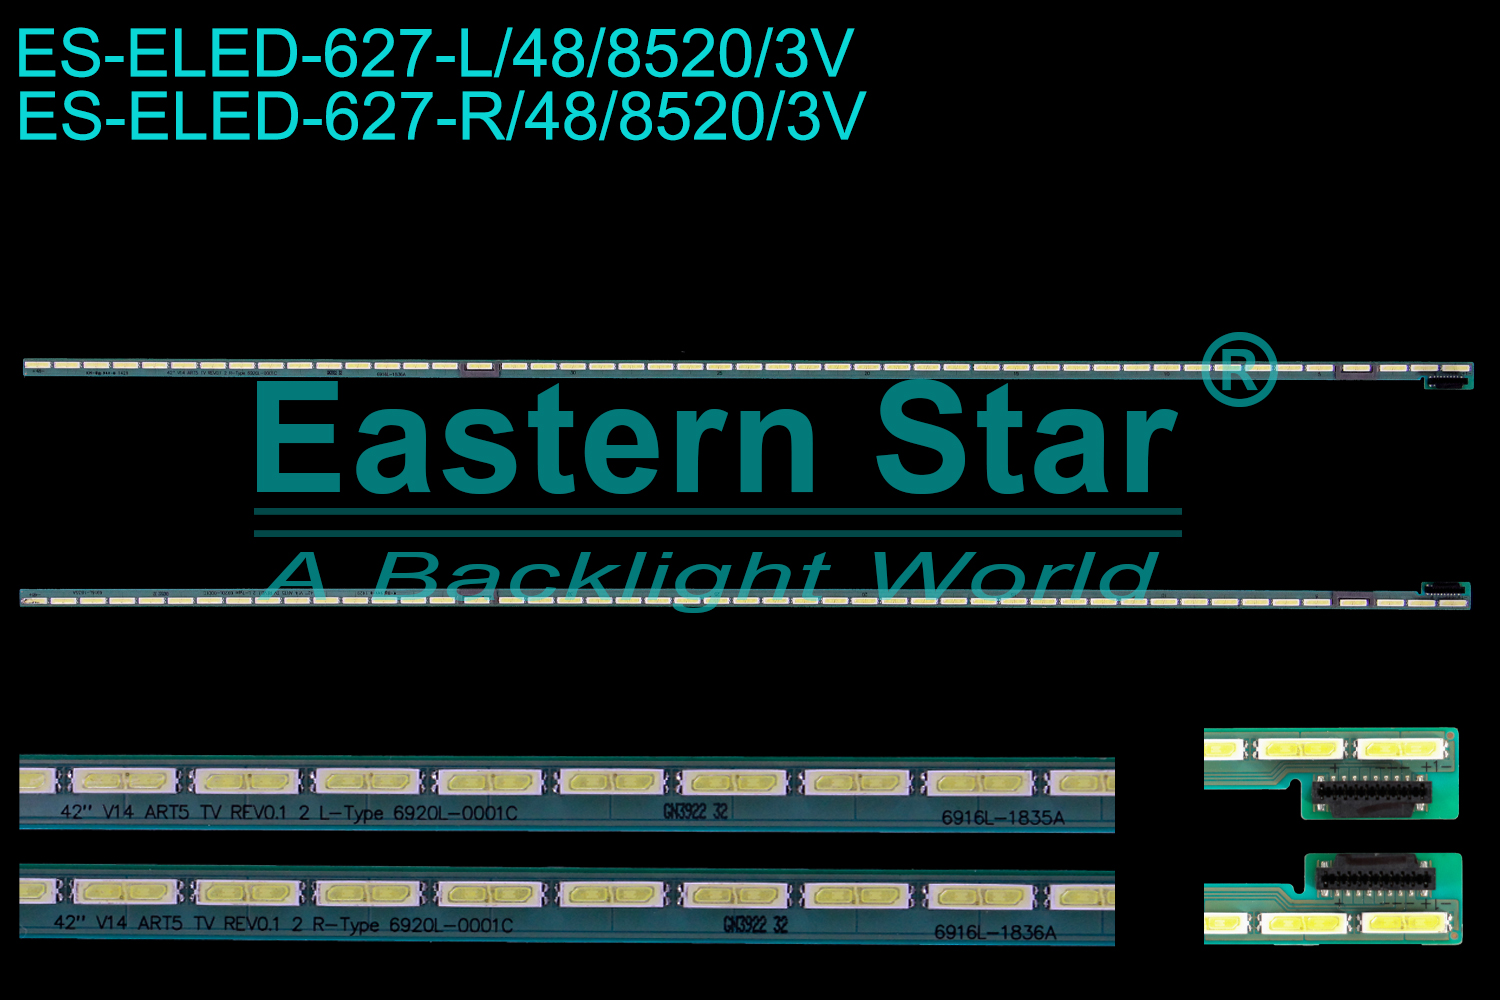 ES-ELED-627 ELED/EDGE TV backlight use for 42'' Lg 42UB700T  42'' V14 ART5 TV REV0.1 2 L/R-TYPE 6920L-001C  6916L-1836A  6922L-0130A LED STRIPS(2)